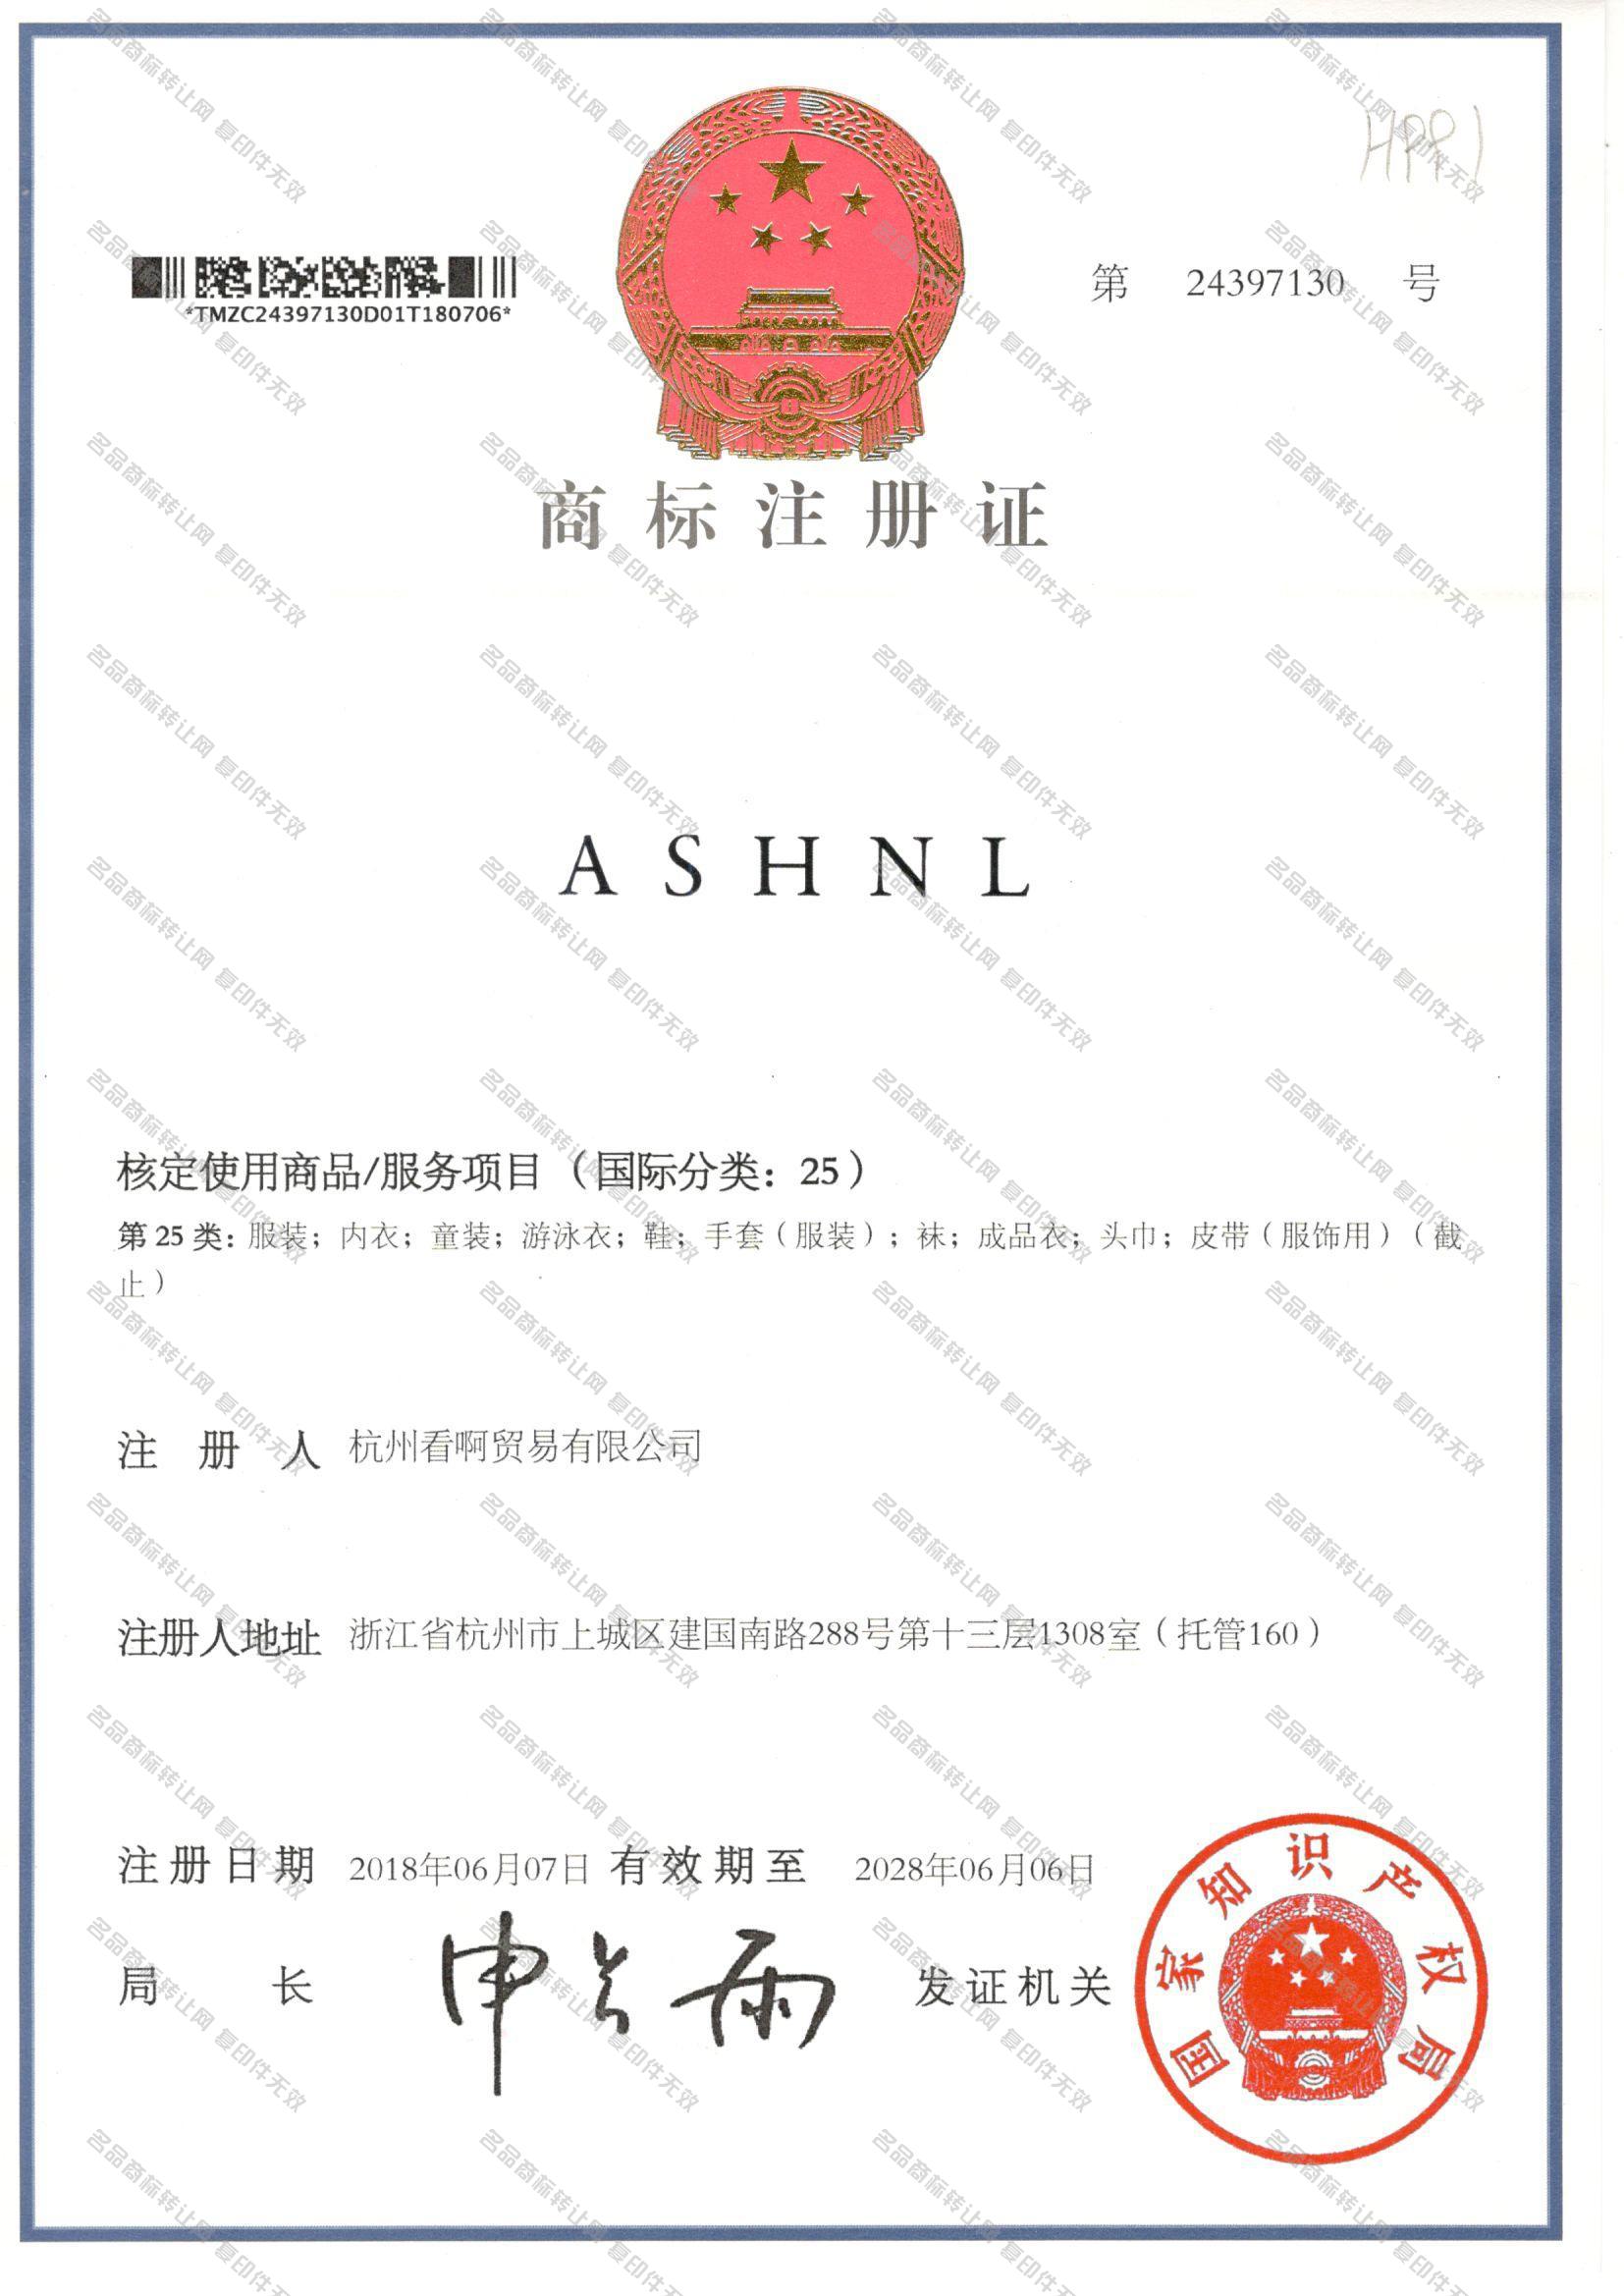 ASHNL注册证